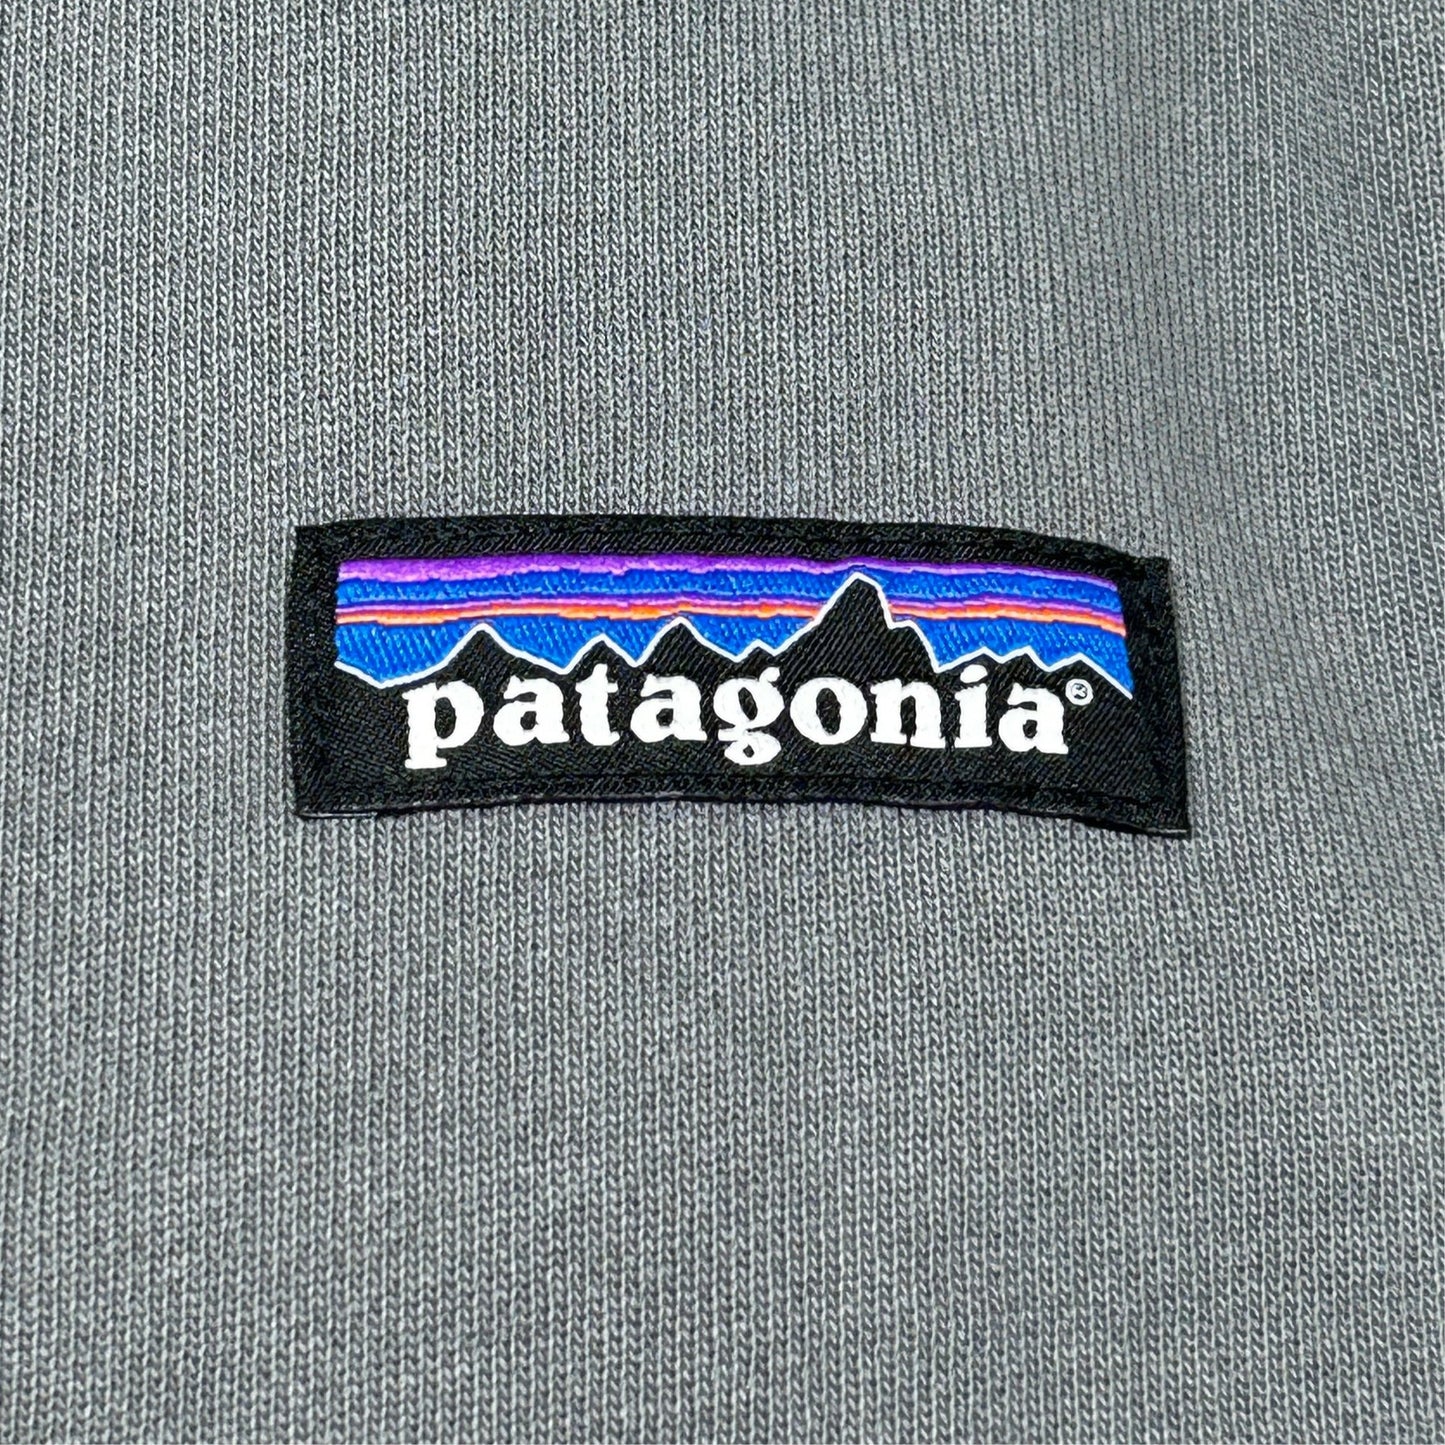 PATAGONIA Regenerative Organic Cotton Hoody Sweatshirt Sz L Noble Grey (New)